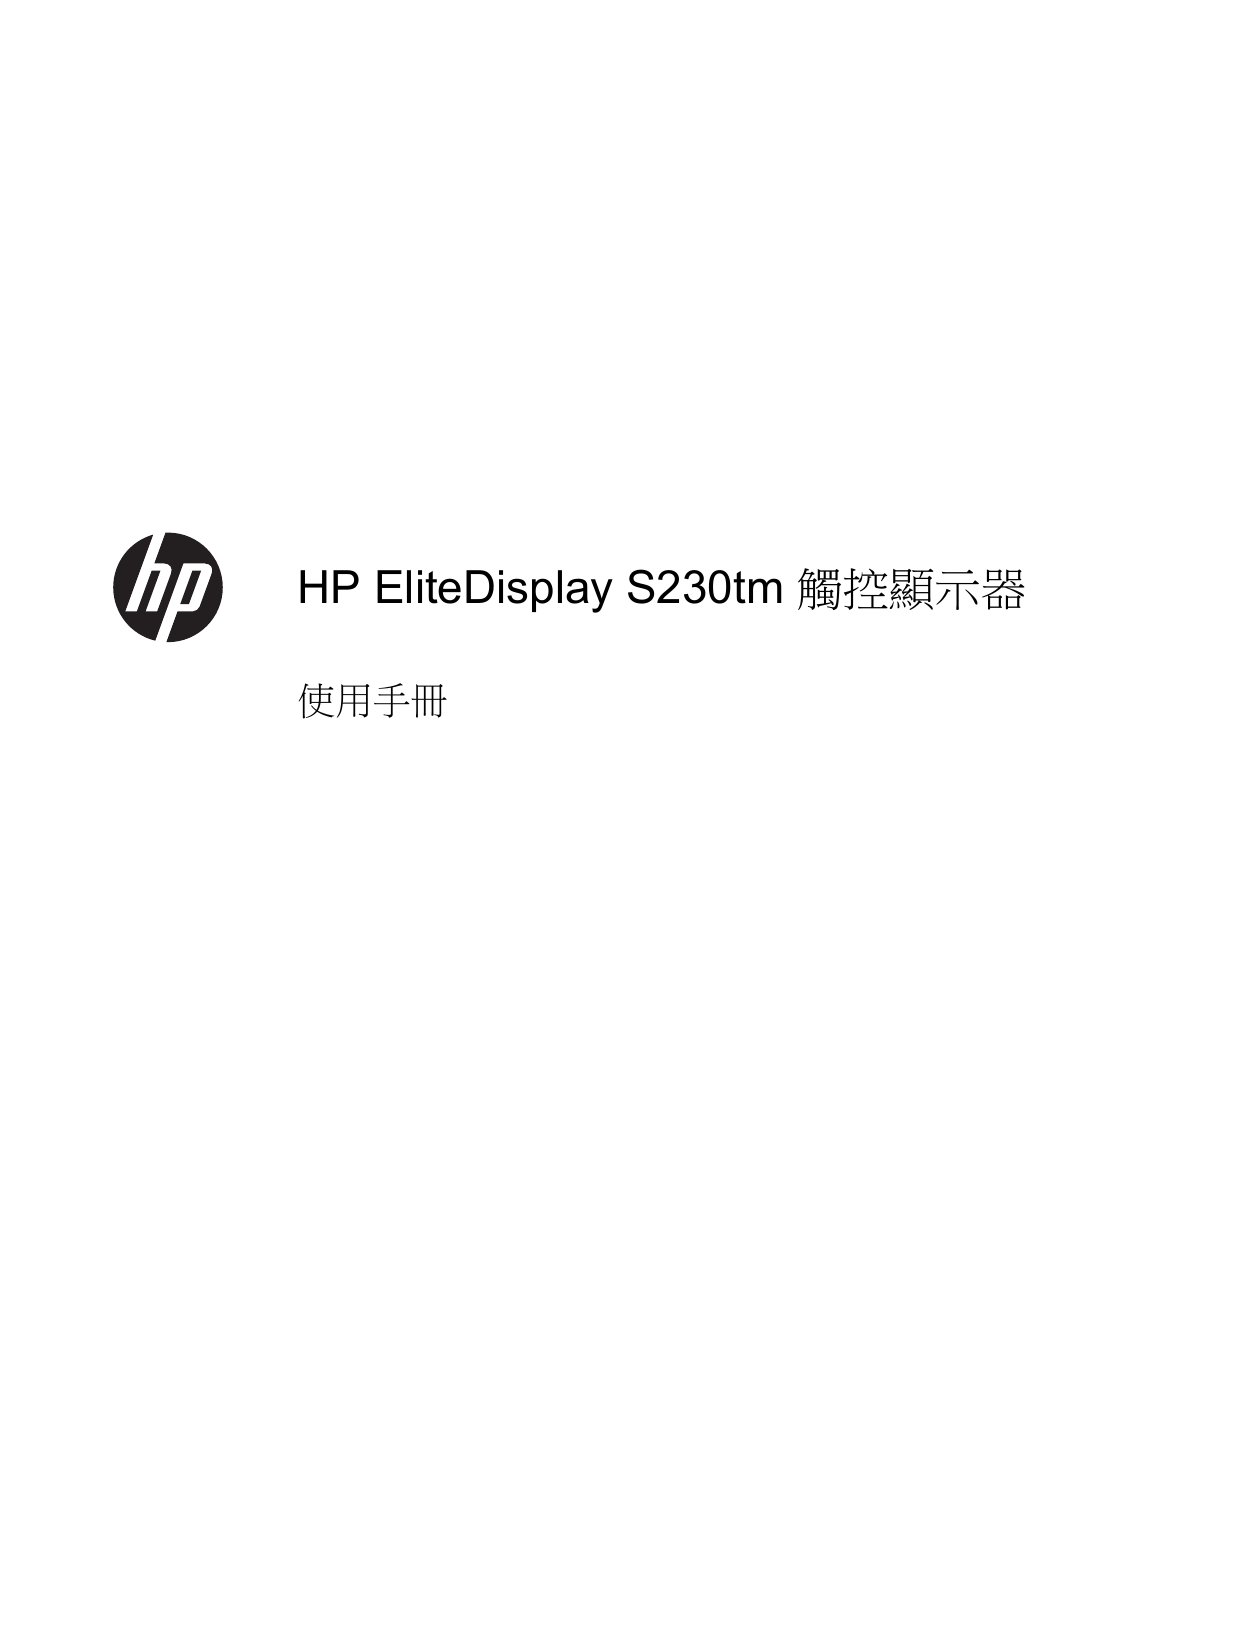 HP EliteDisplay S230tm 23-inch Touch Monitor 使用手冊| Manualzz